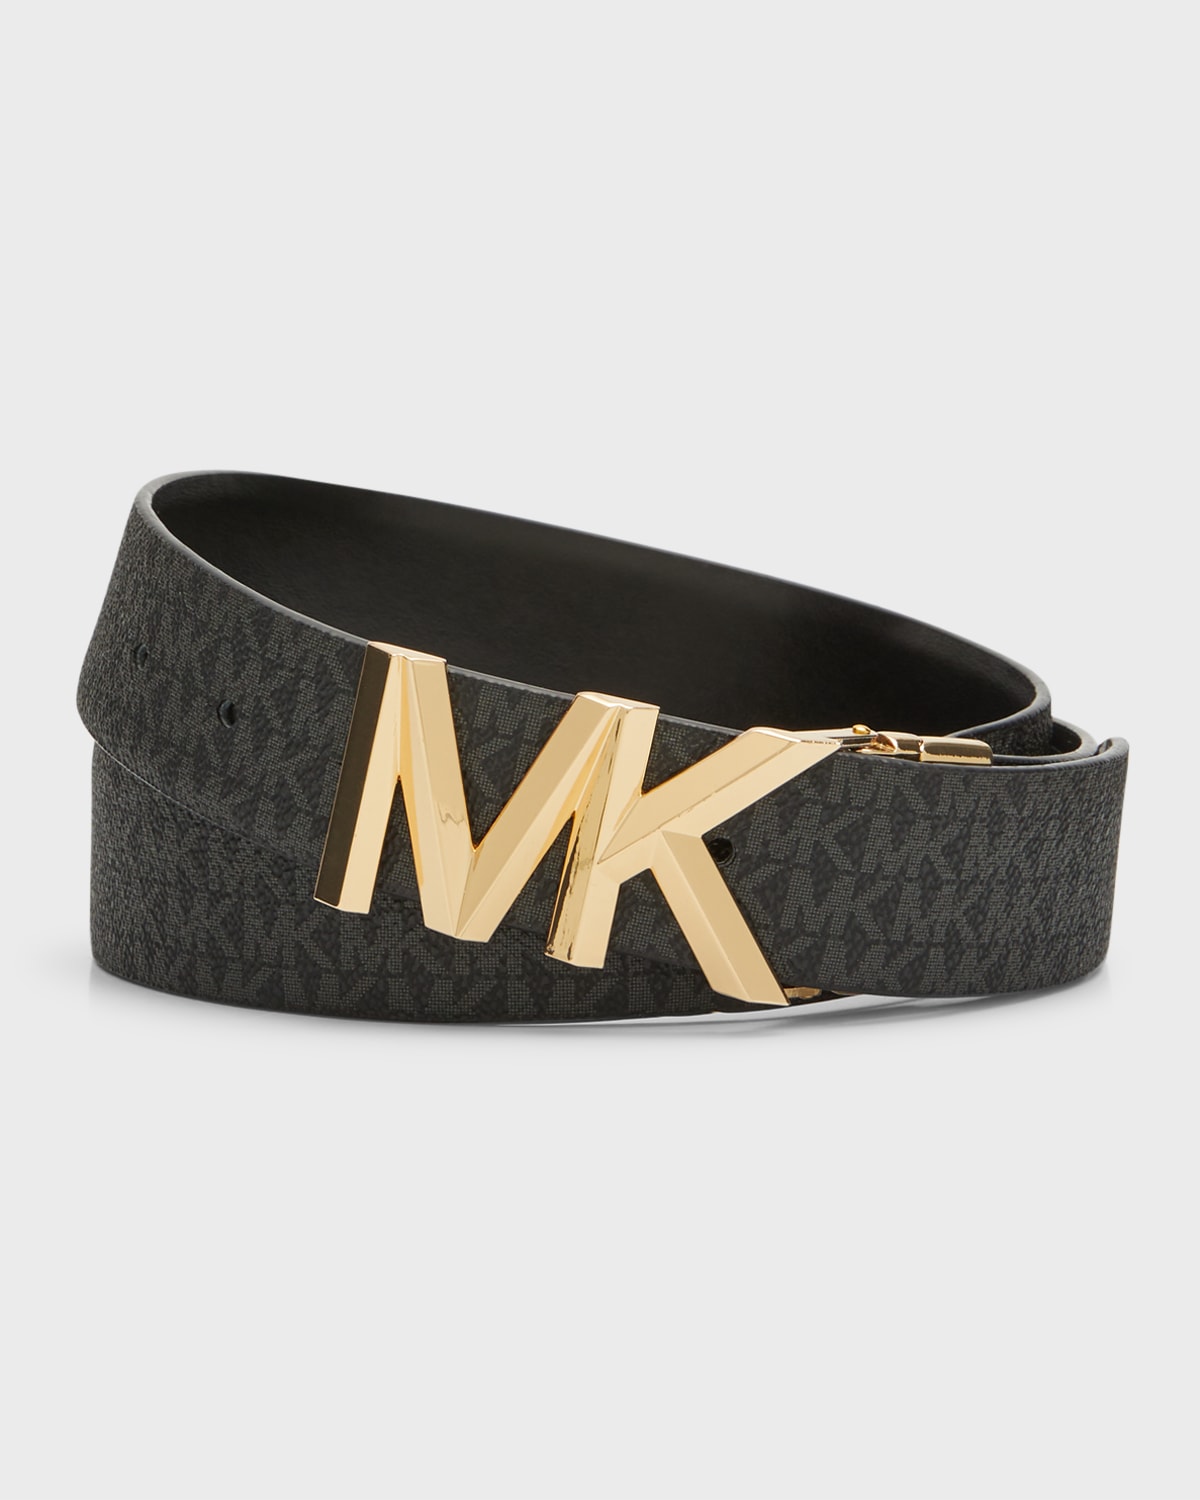 MK Logo Reversible Black Leather Belt